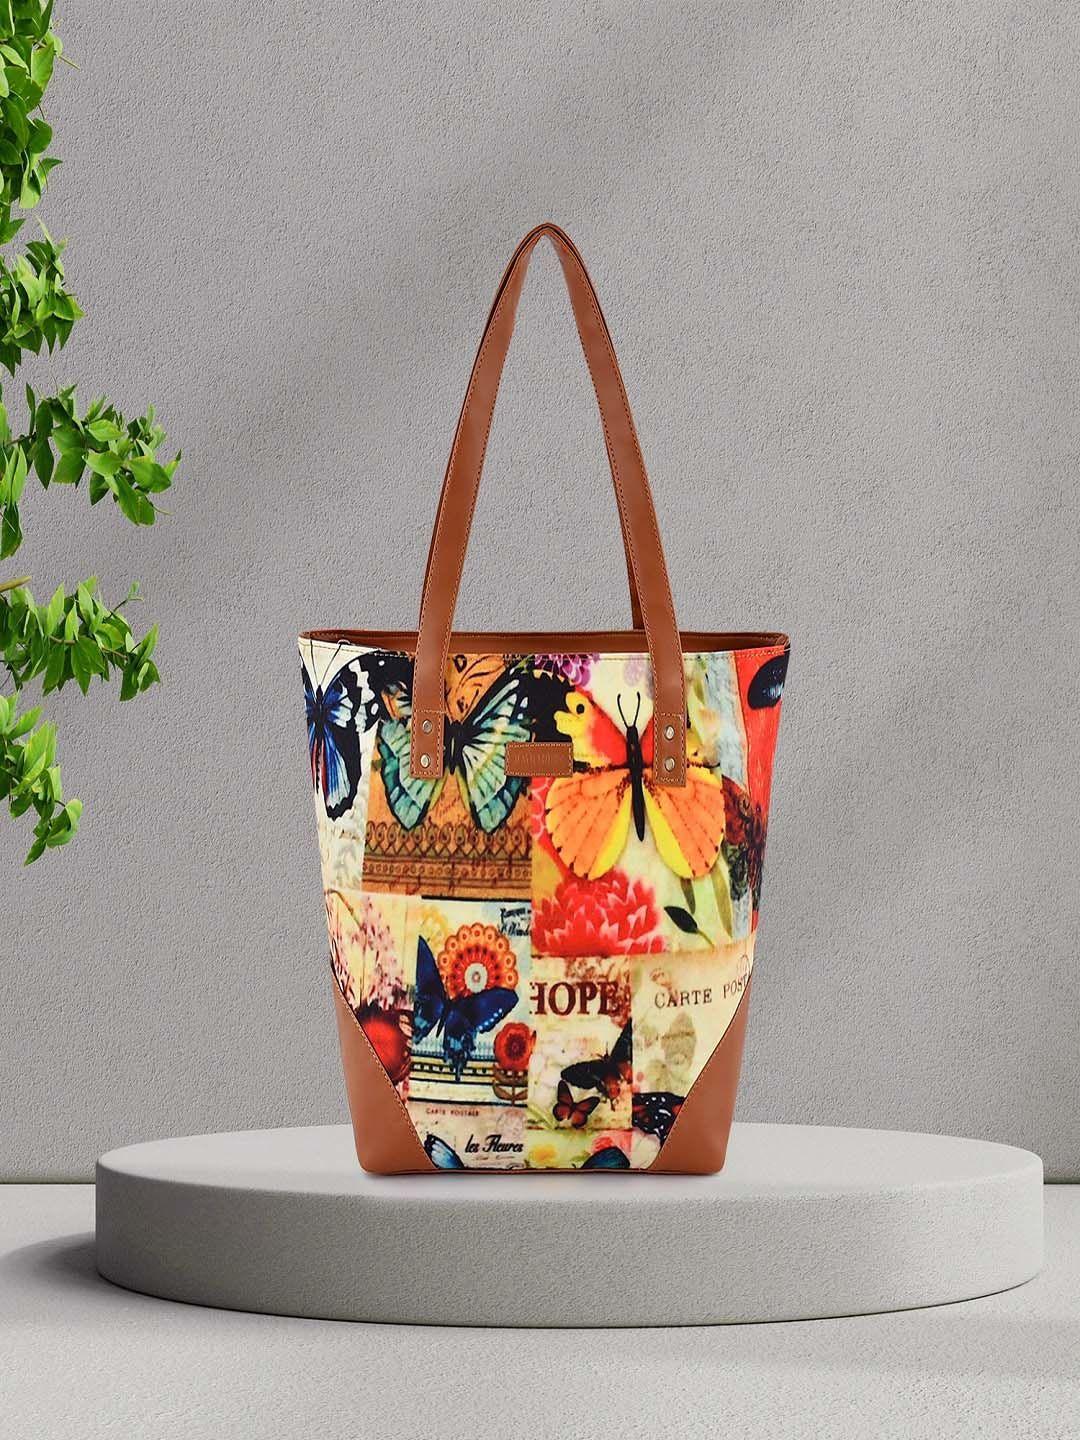 lychee bags brown printed shopper canvas tote bag